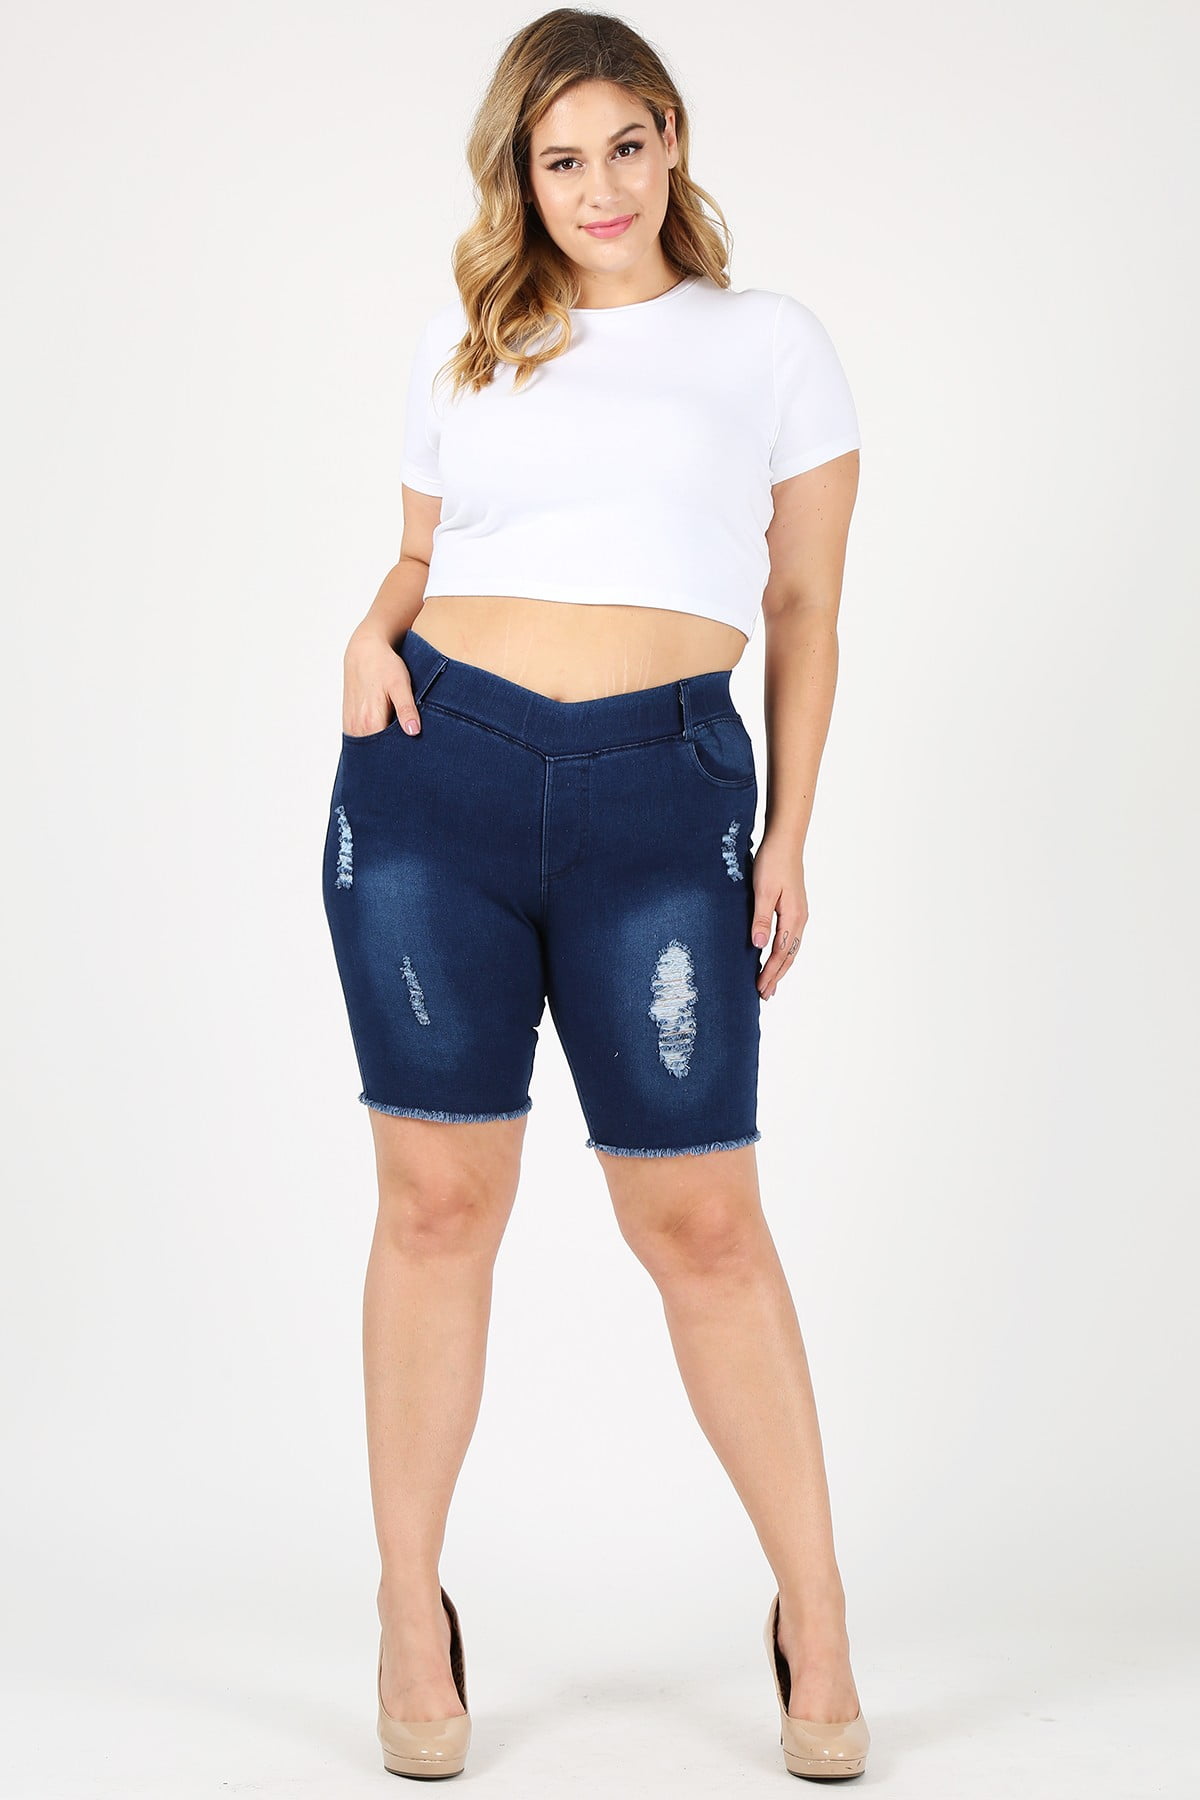 Love Sweet - Plus size women pull-on 5 pockets classic jeans Bermudas ...